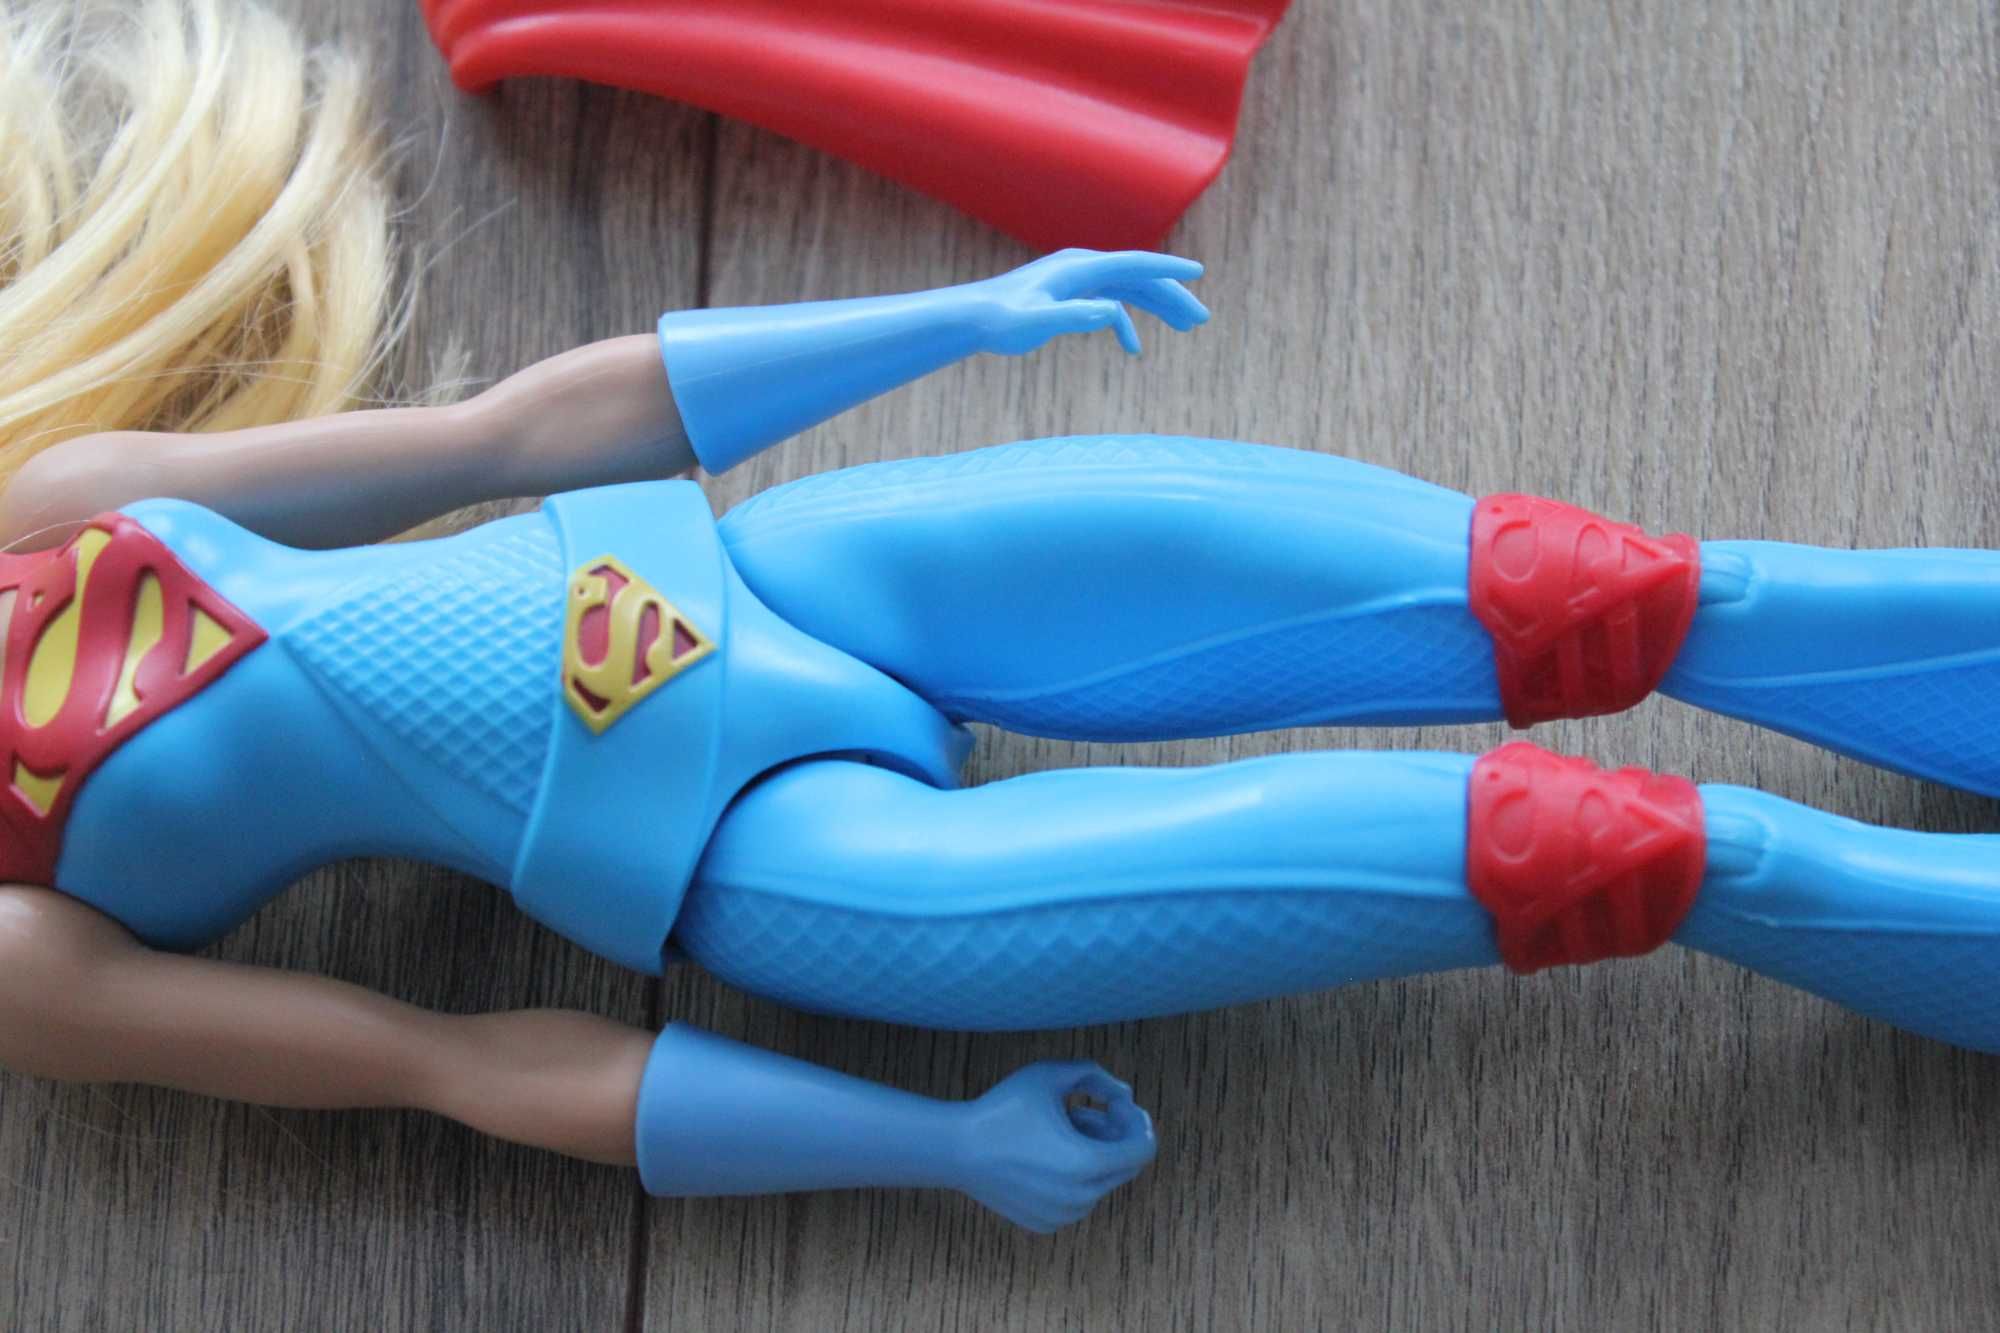 Lalka Super Hero Girls Mattel DMM25, lalka zginalne nogi